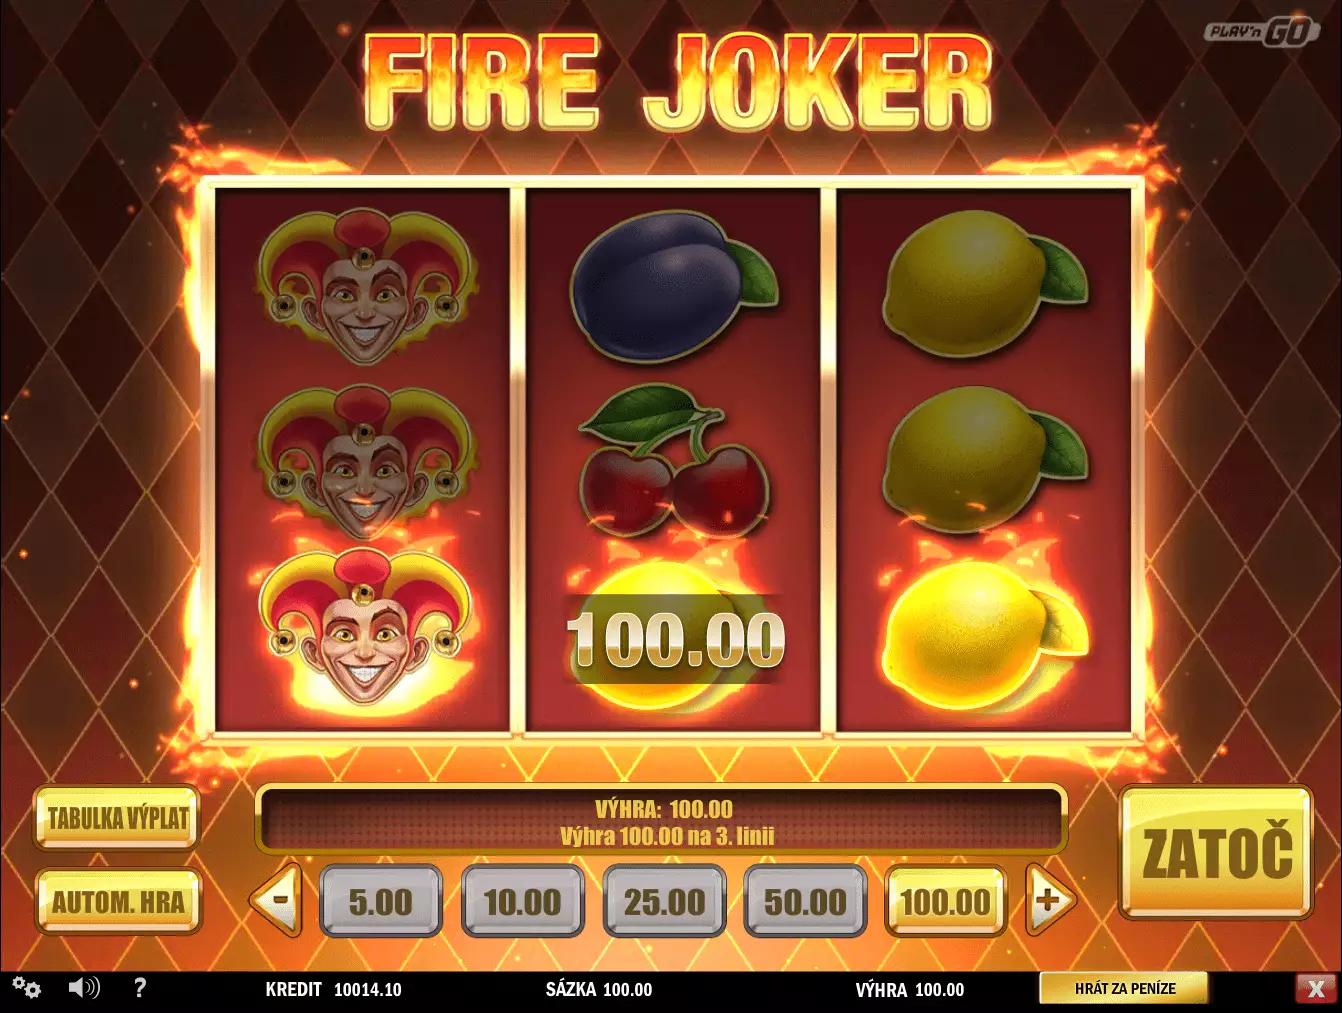 Play'n GO automat Fire Joke - hrajte zdarma v Tipsport Vegas